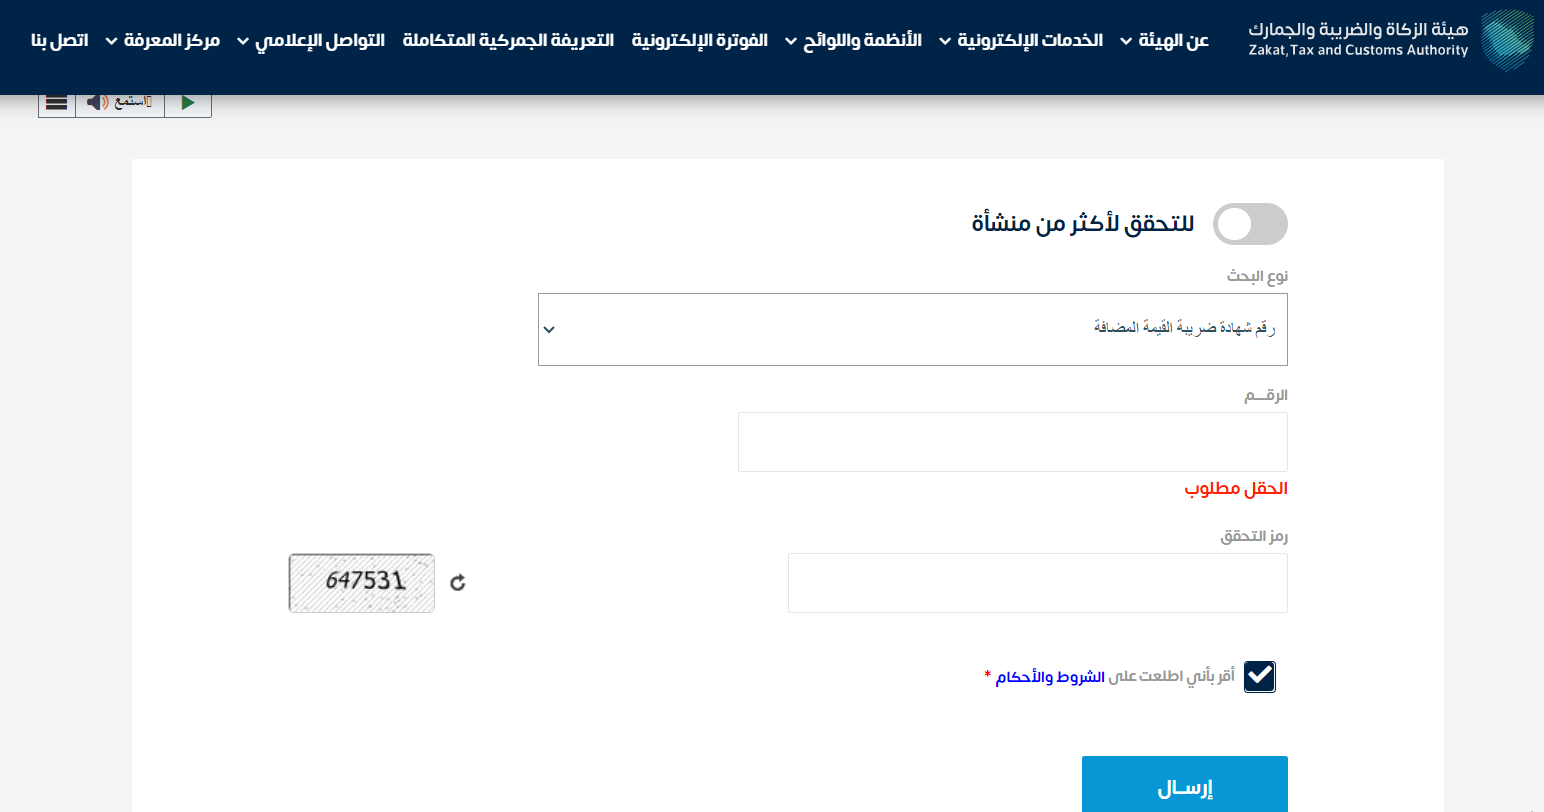 VAT number Verification on zatka website in Saudi